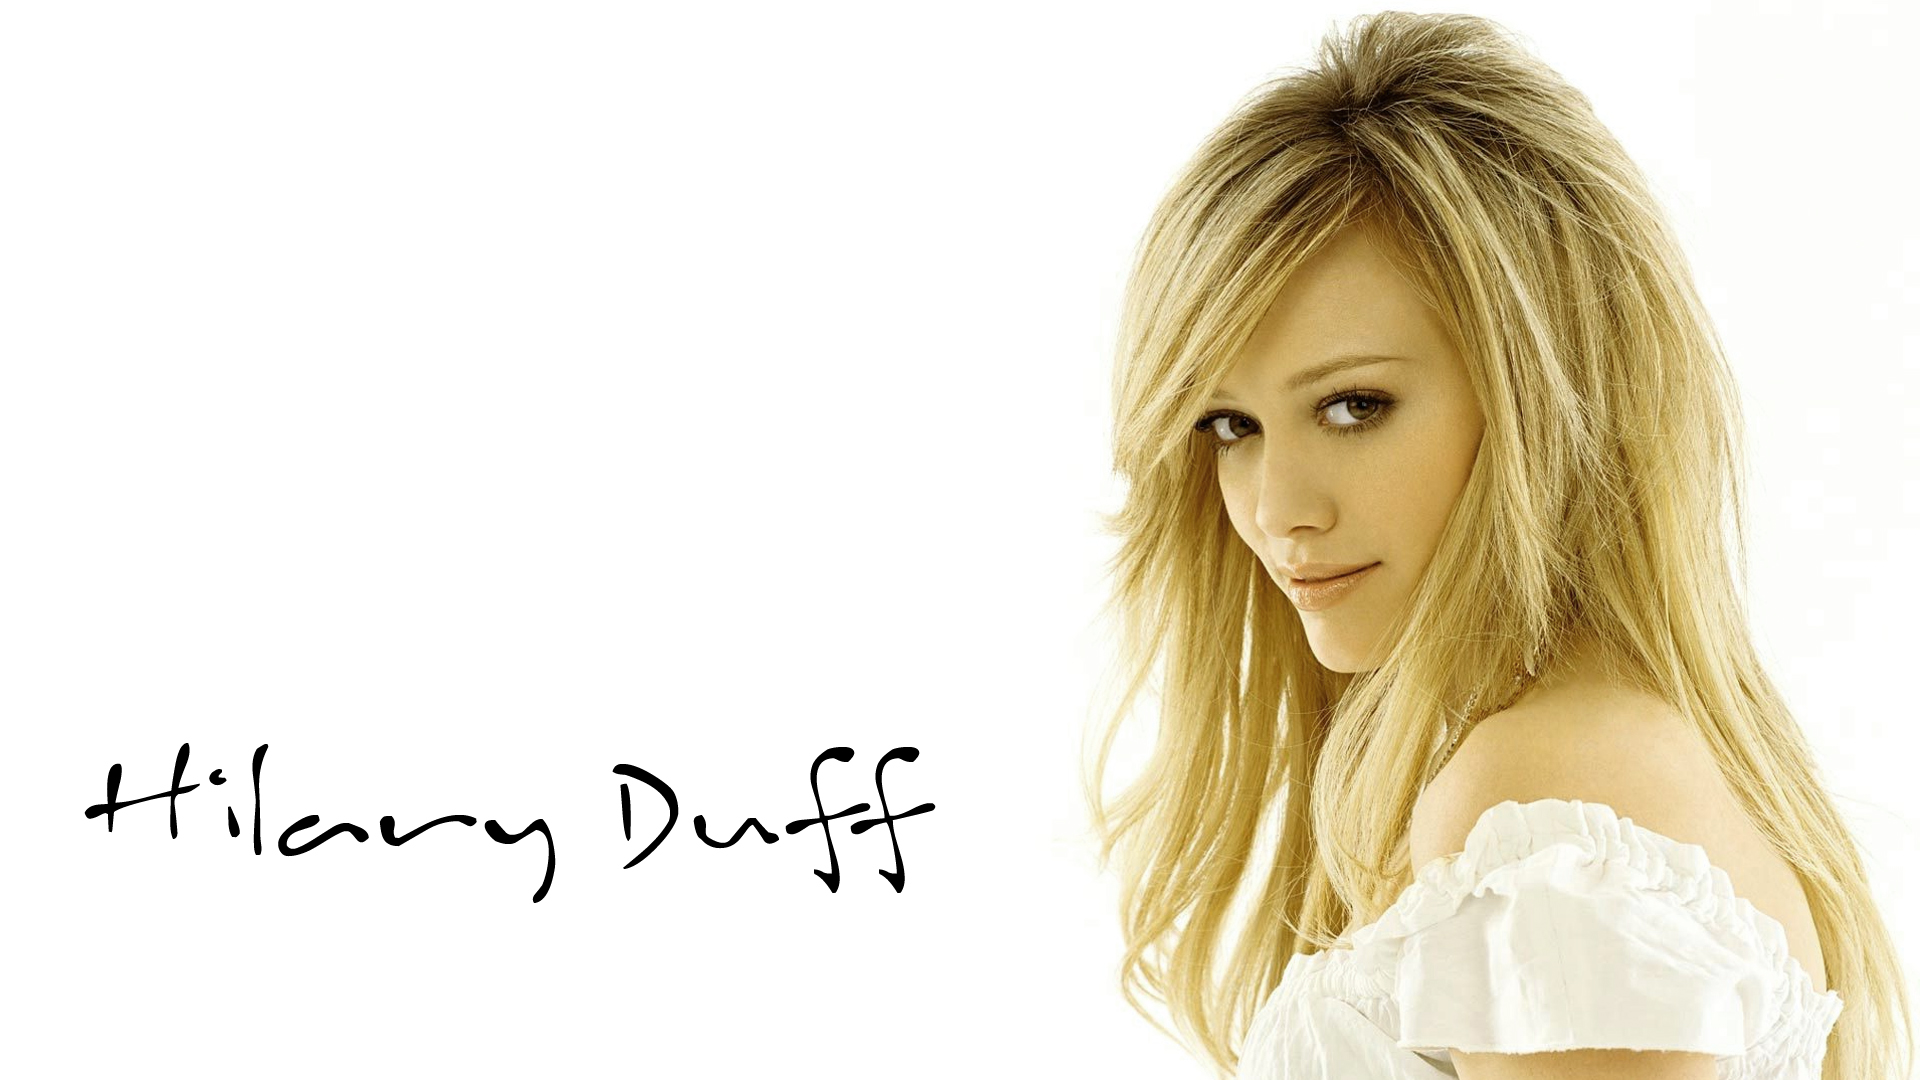 Beautiful Hilary Duff Choice Wallpaper